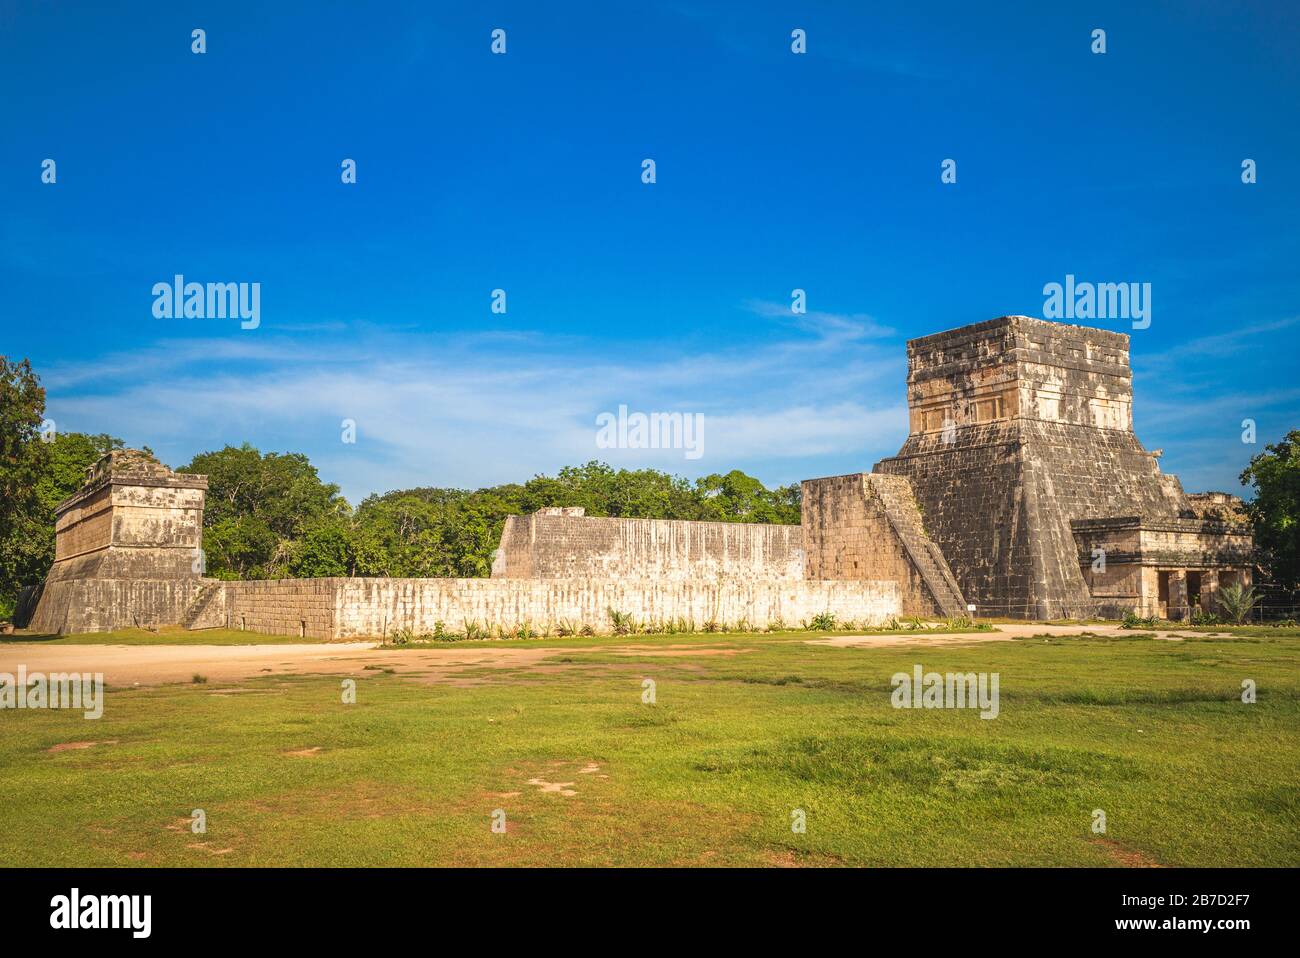 Grand terrain de balle de El Castillo, Chichen Itza, Mexique Banque D'Images